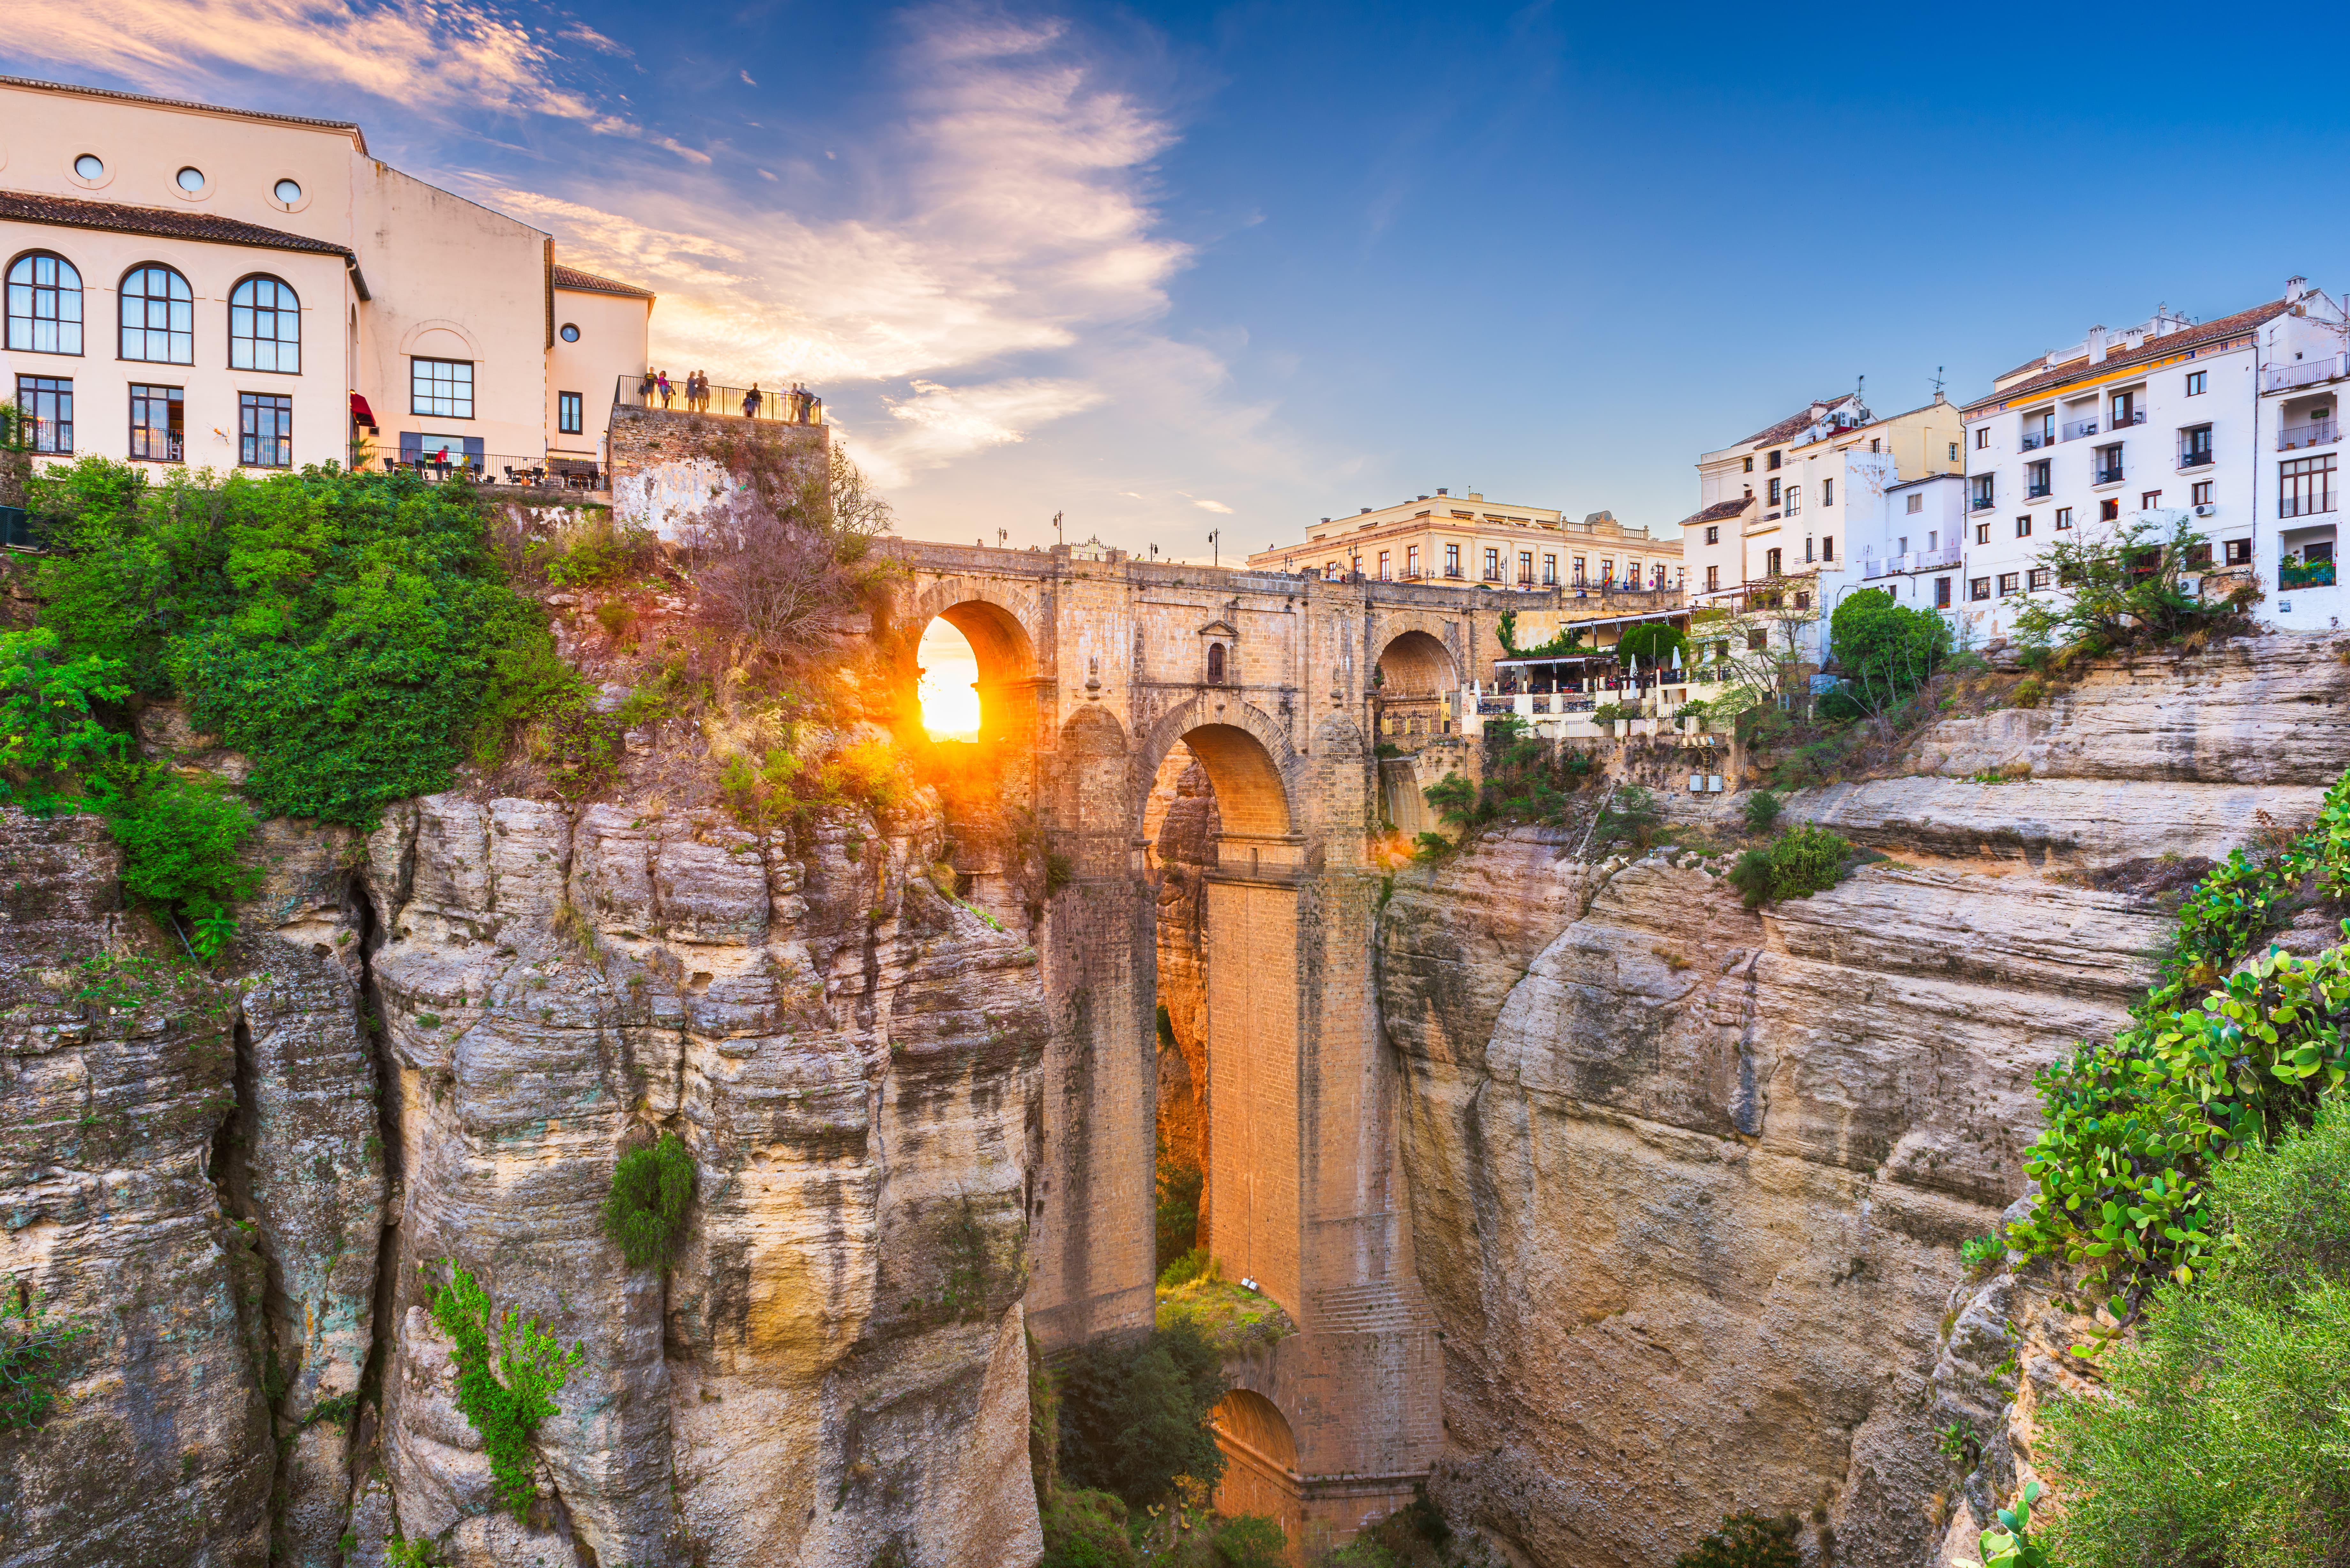 Ancient Puente Nuevo Bridge in Ronda, Spain, a must-see in Europe